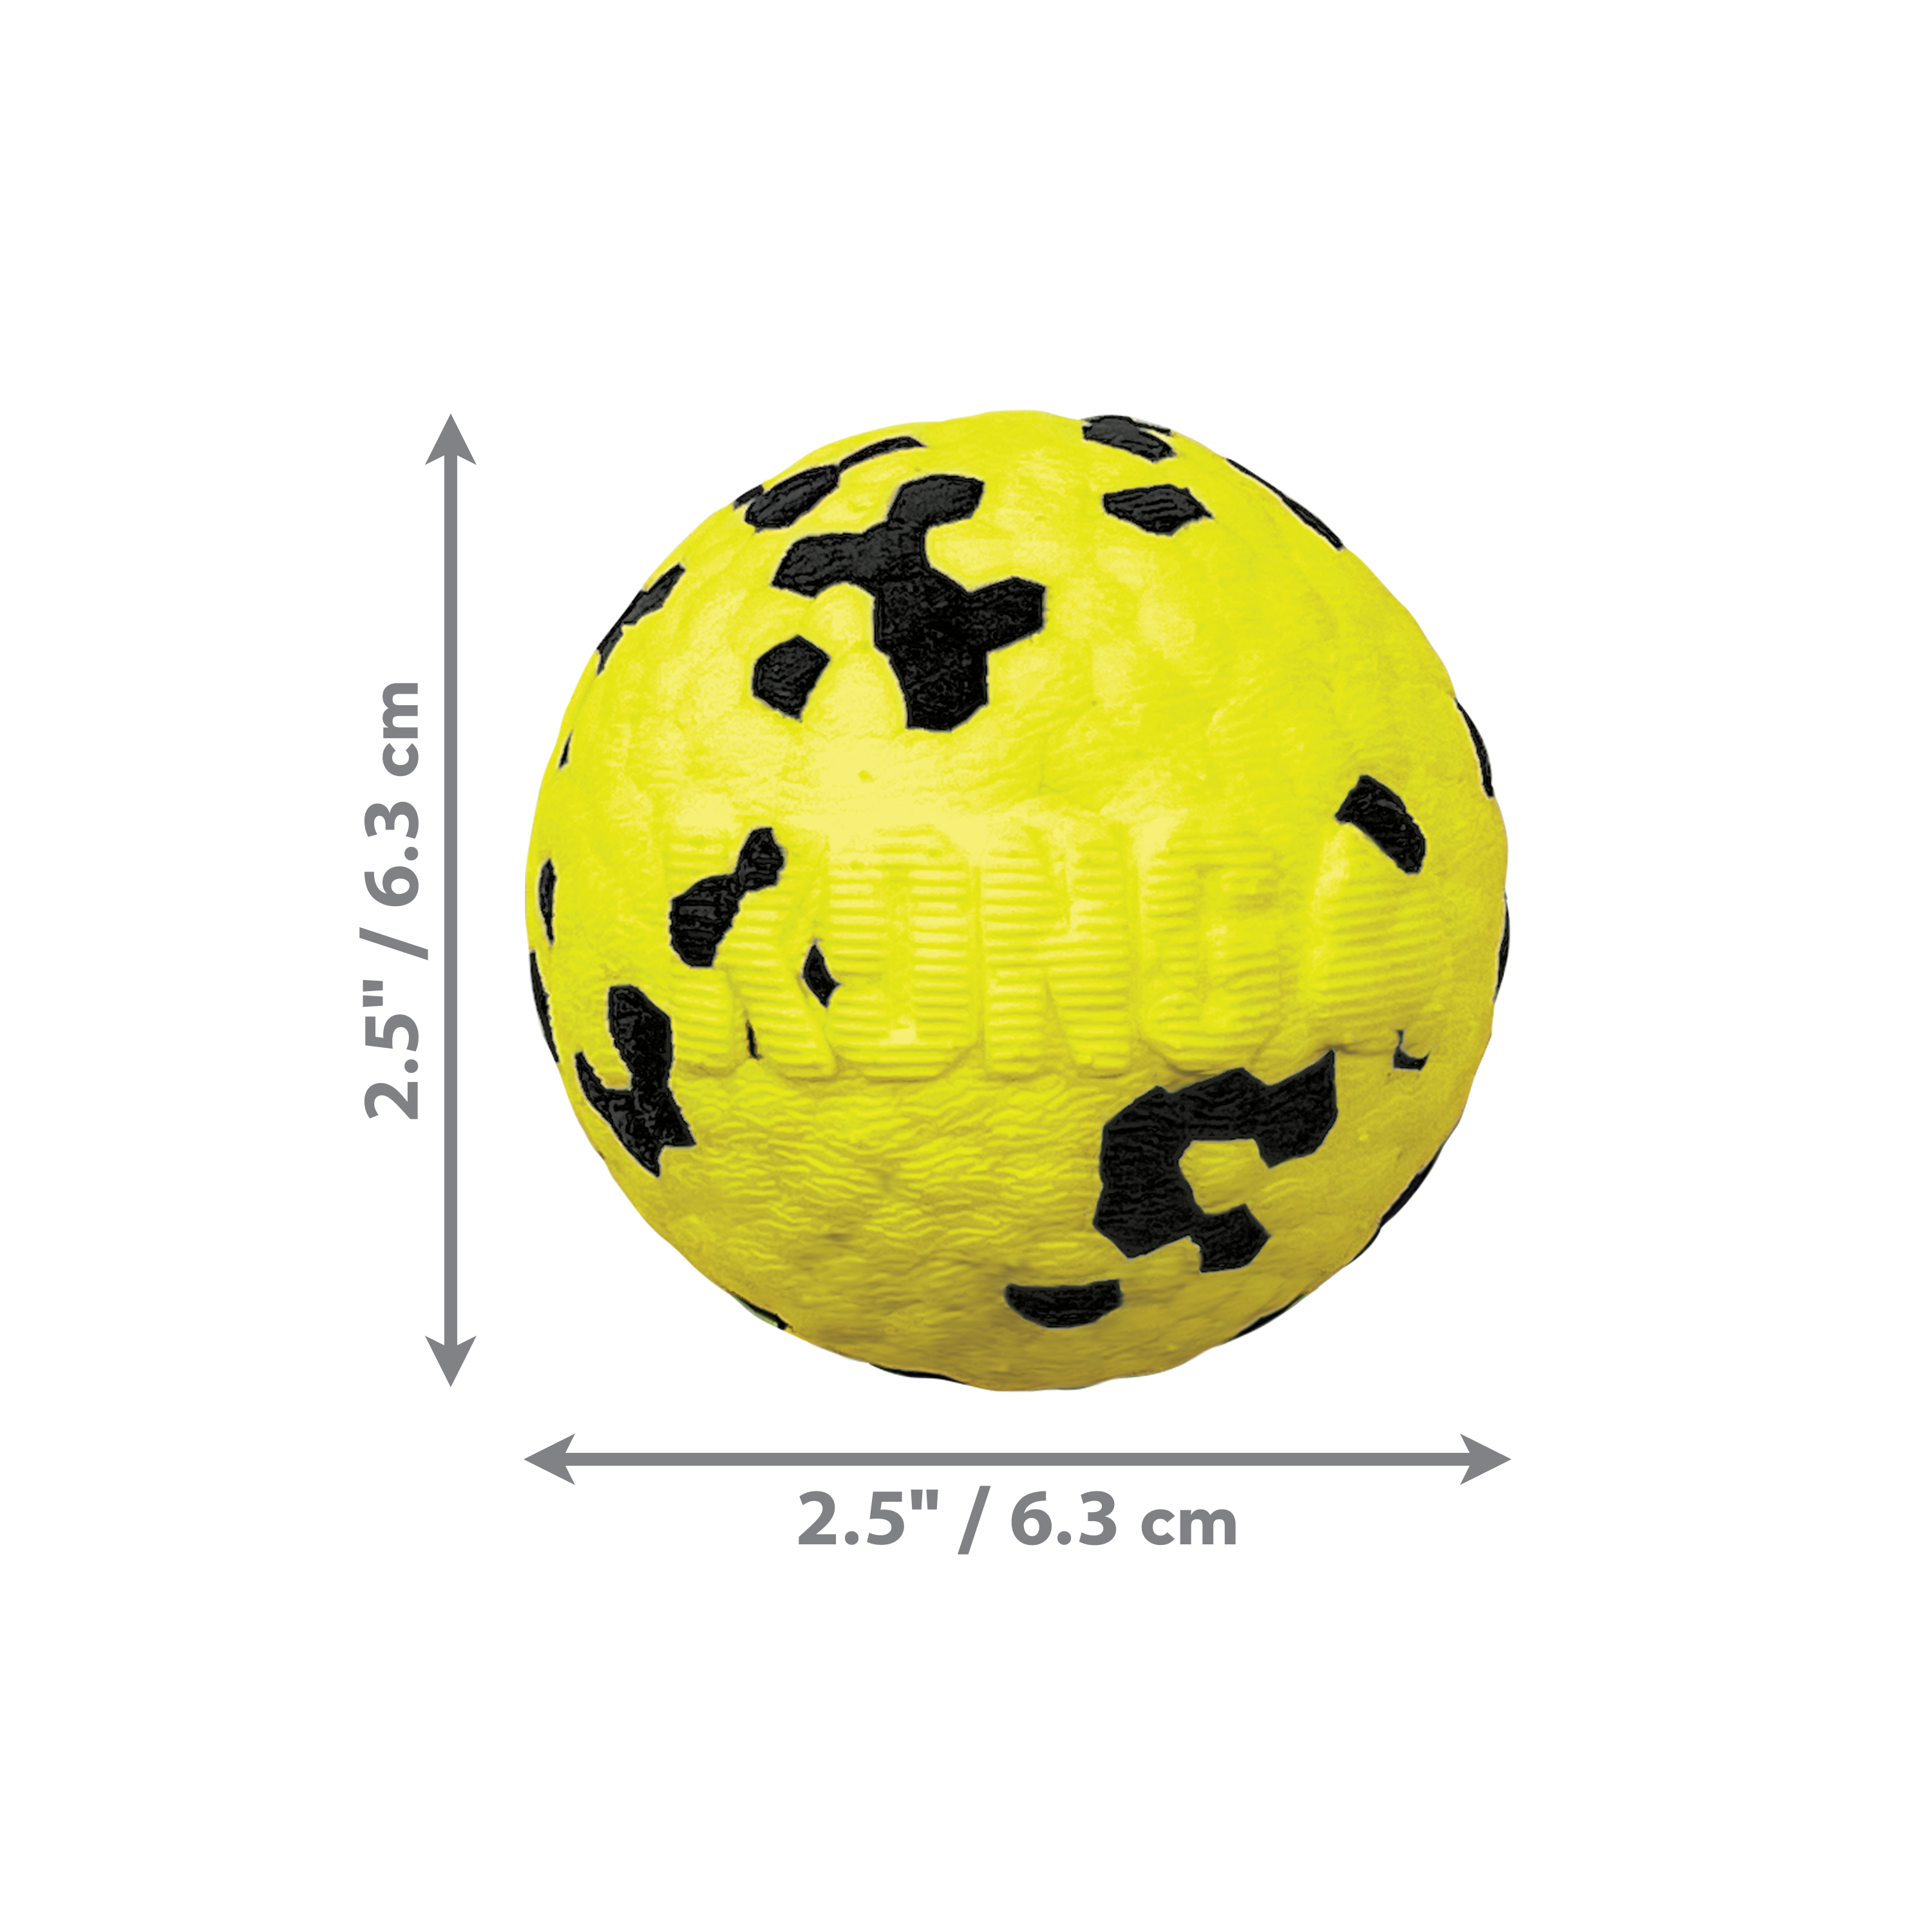 Reflex Ball dimoffpack termékkép